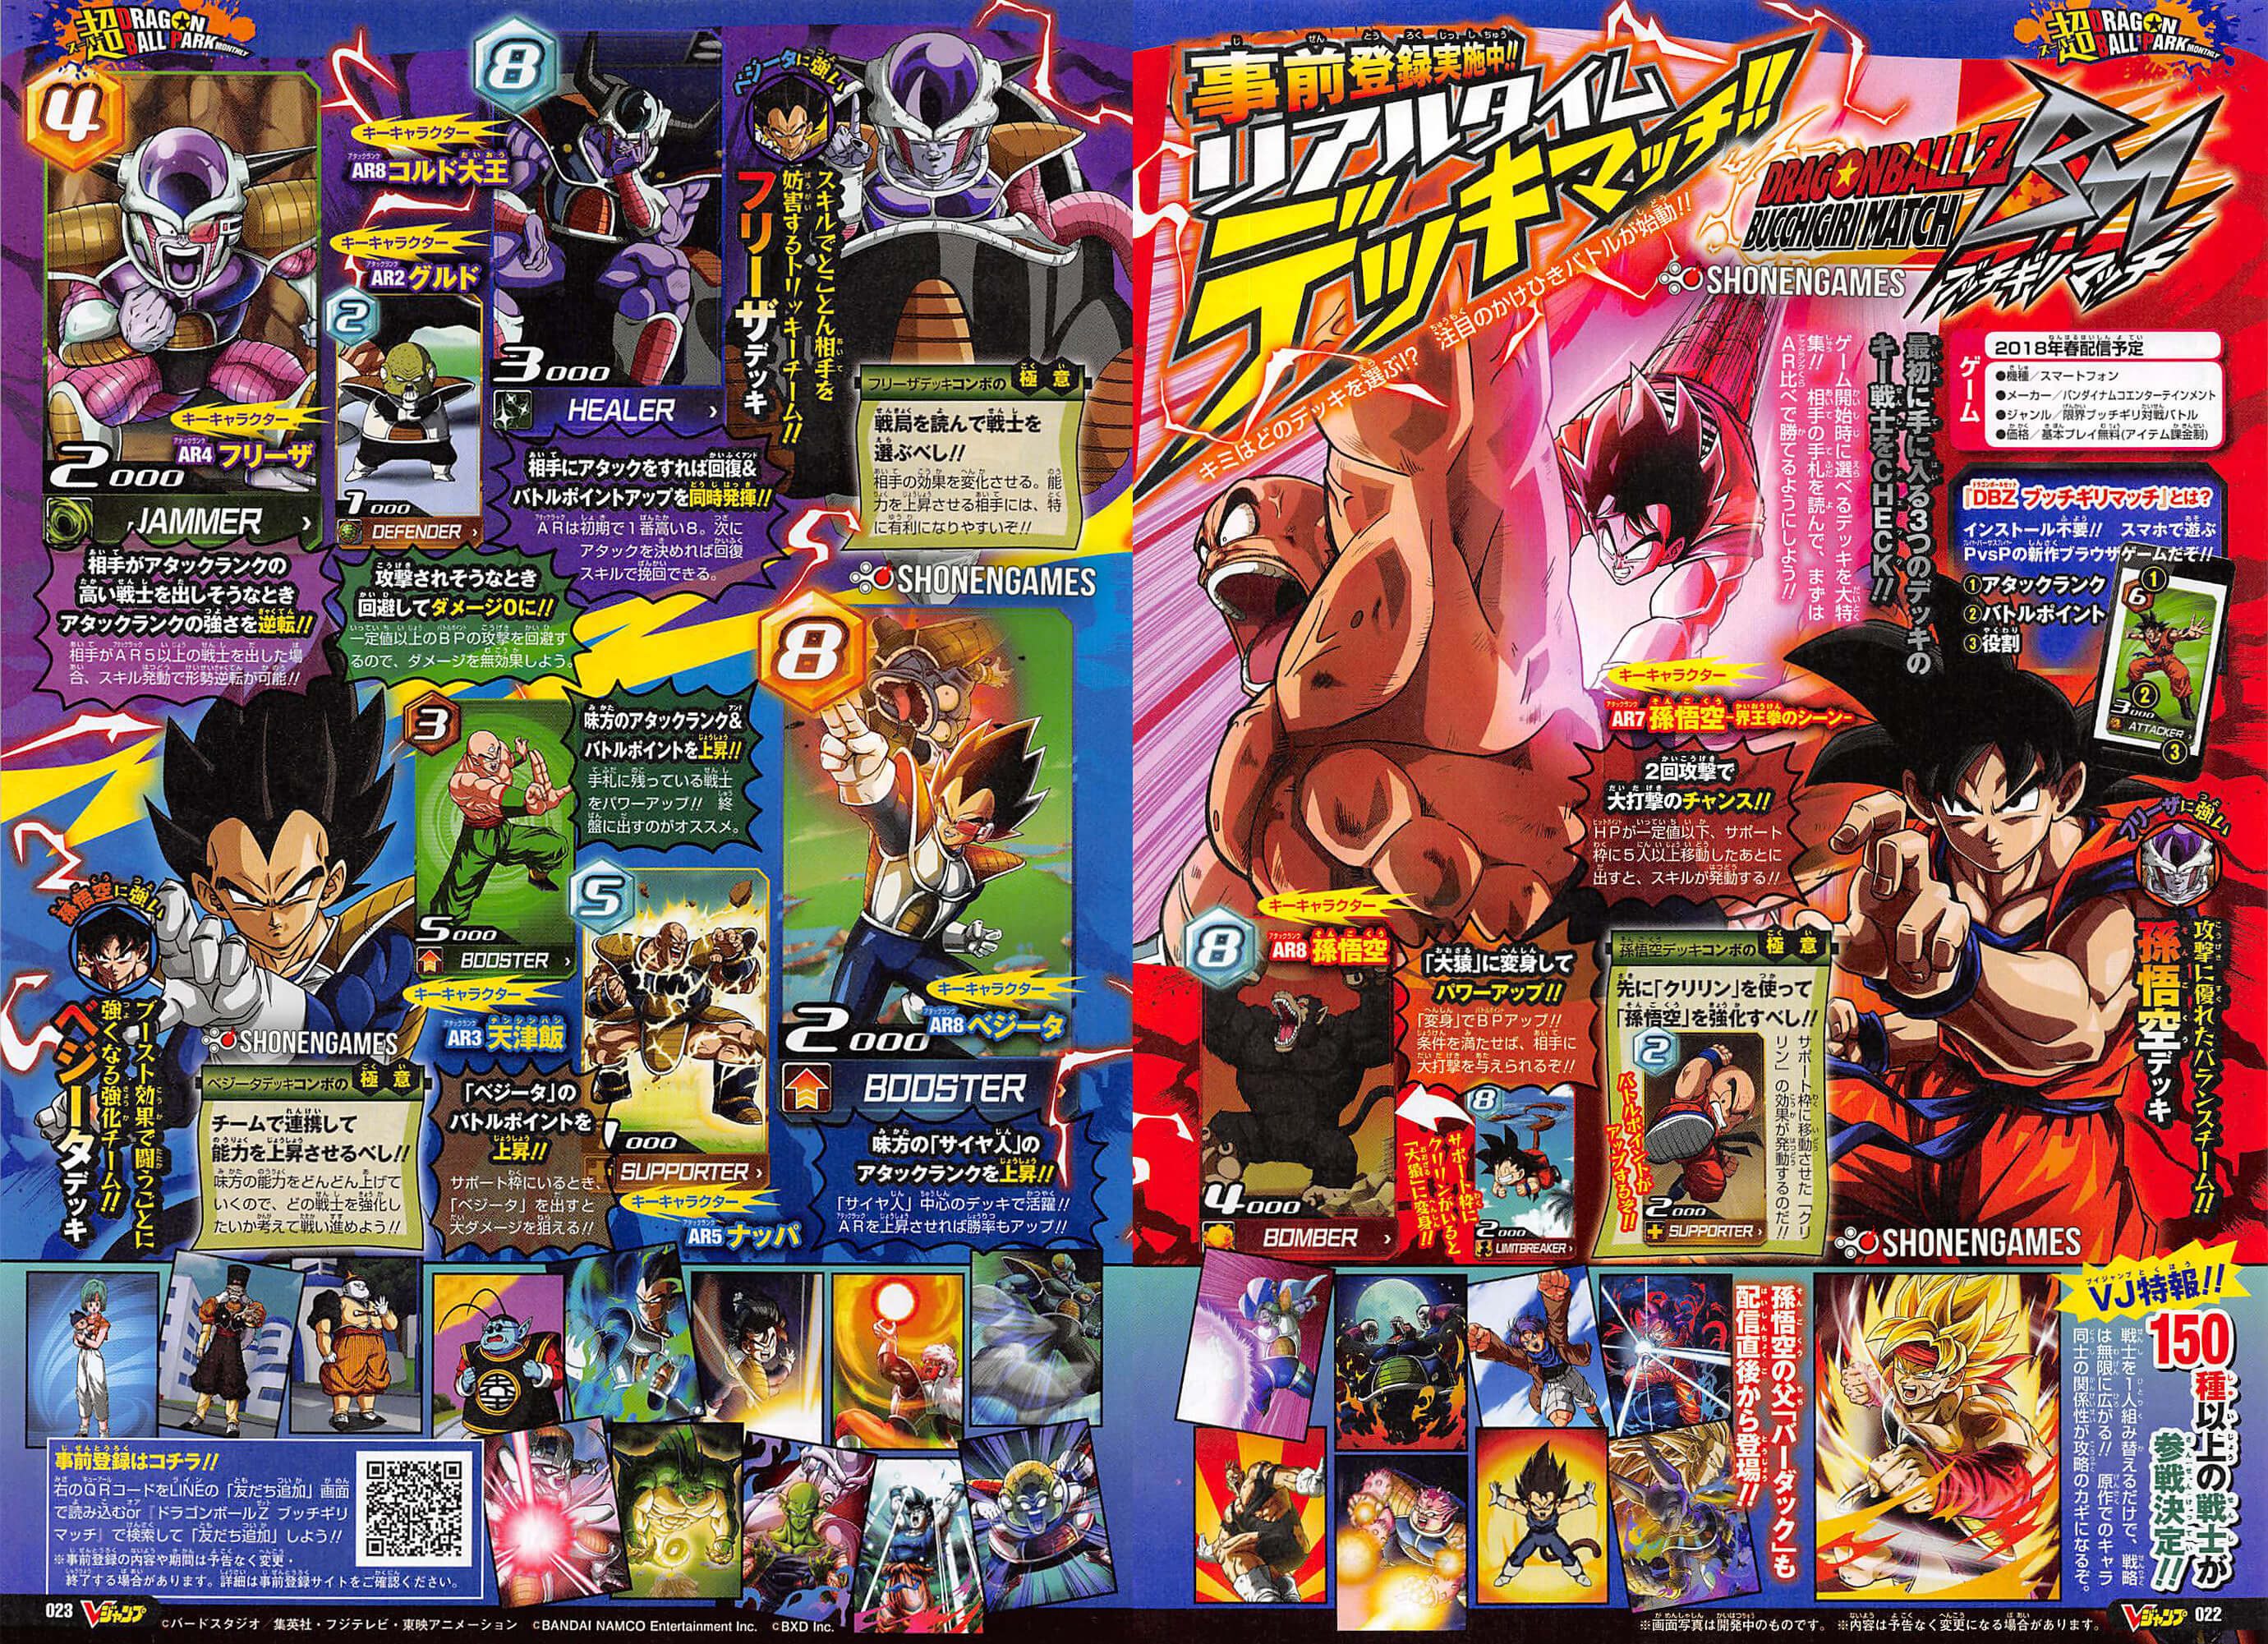 Dragon Ball Z Bucchigiri Match - a HTML5 game has started pre